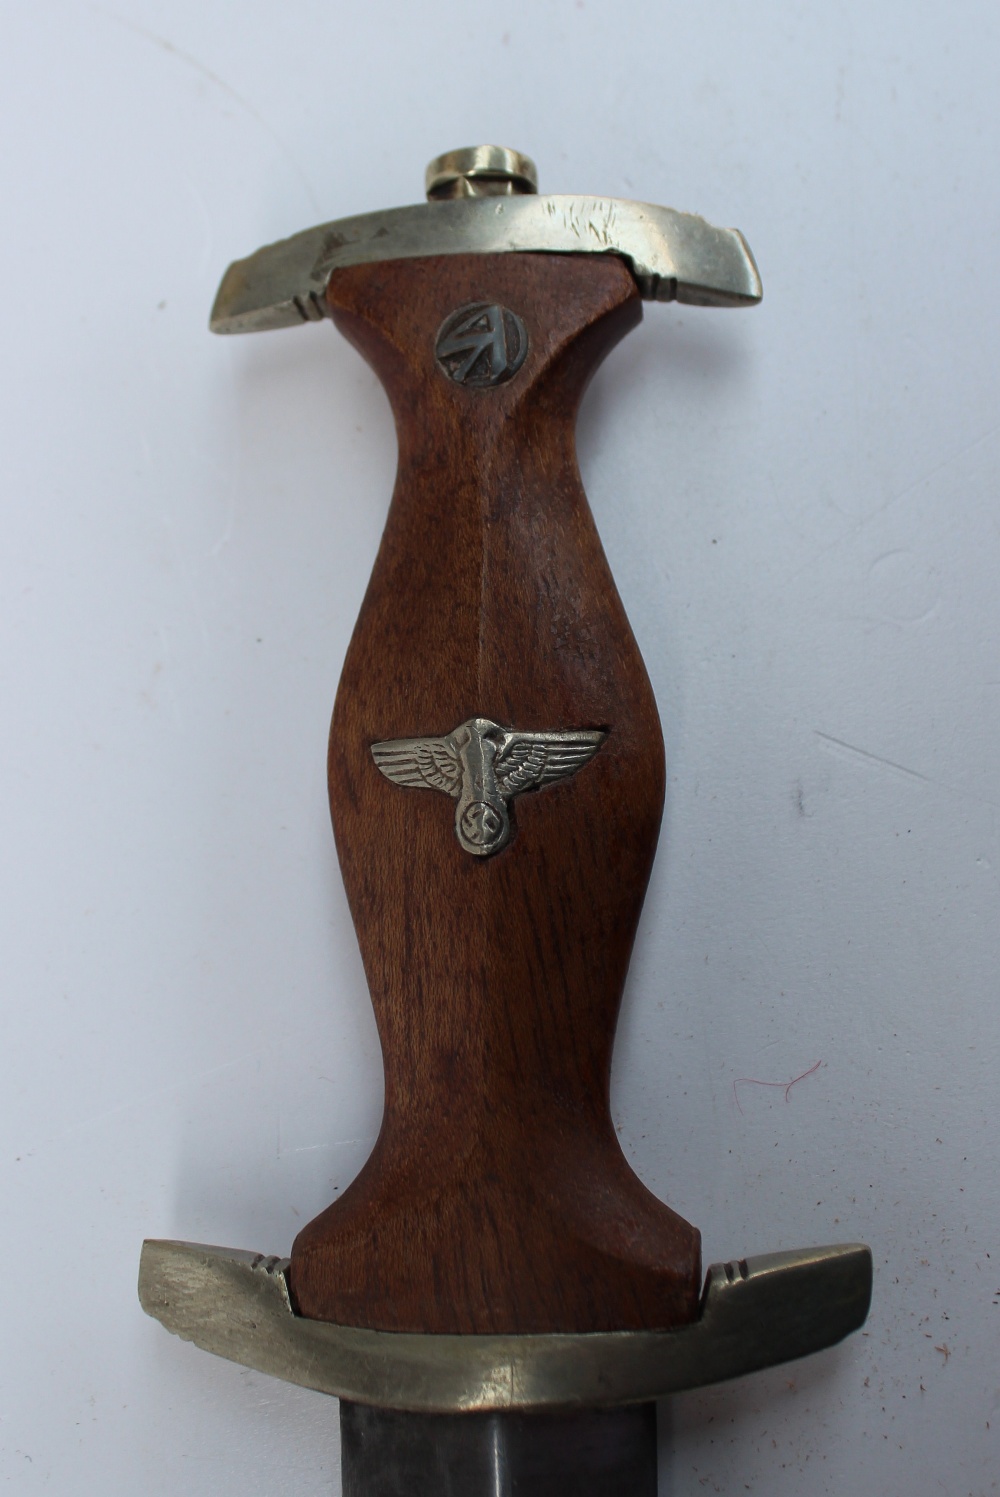 A reproduction Nazi SA dagger with regulation hilt, 'Alles fur Deutchland', etched blade, - Image 2 of 5